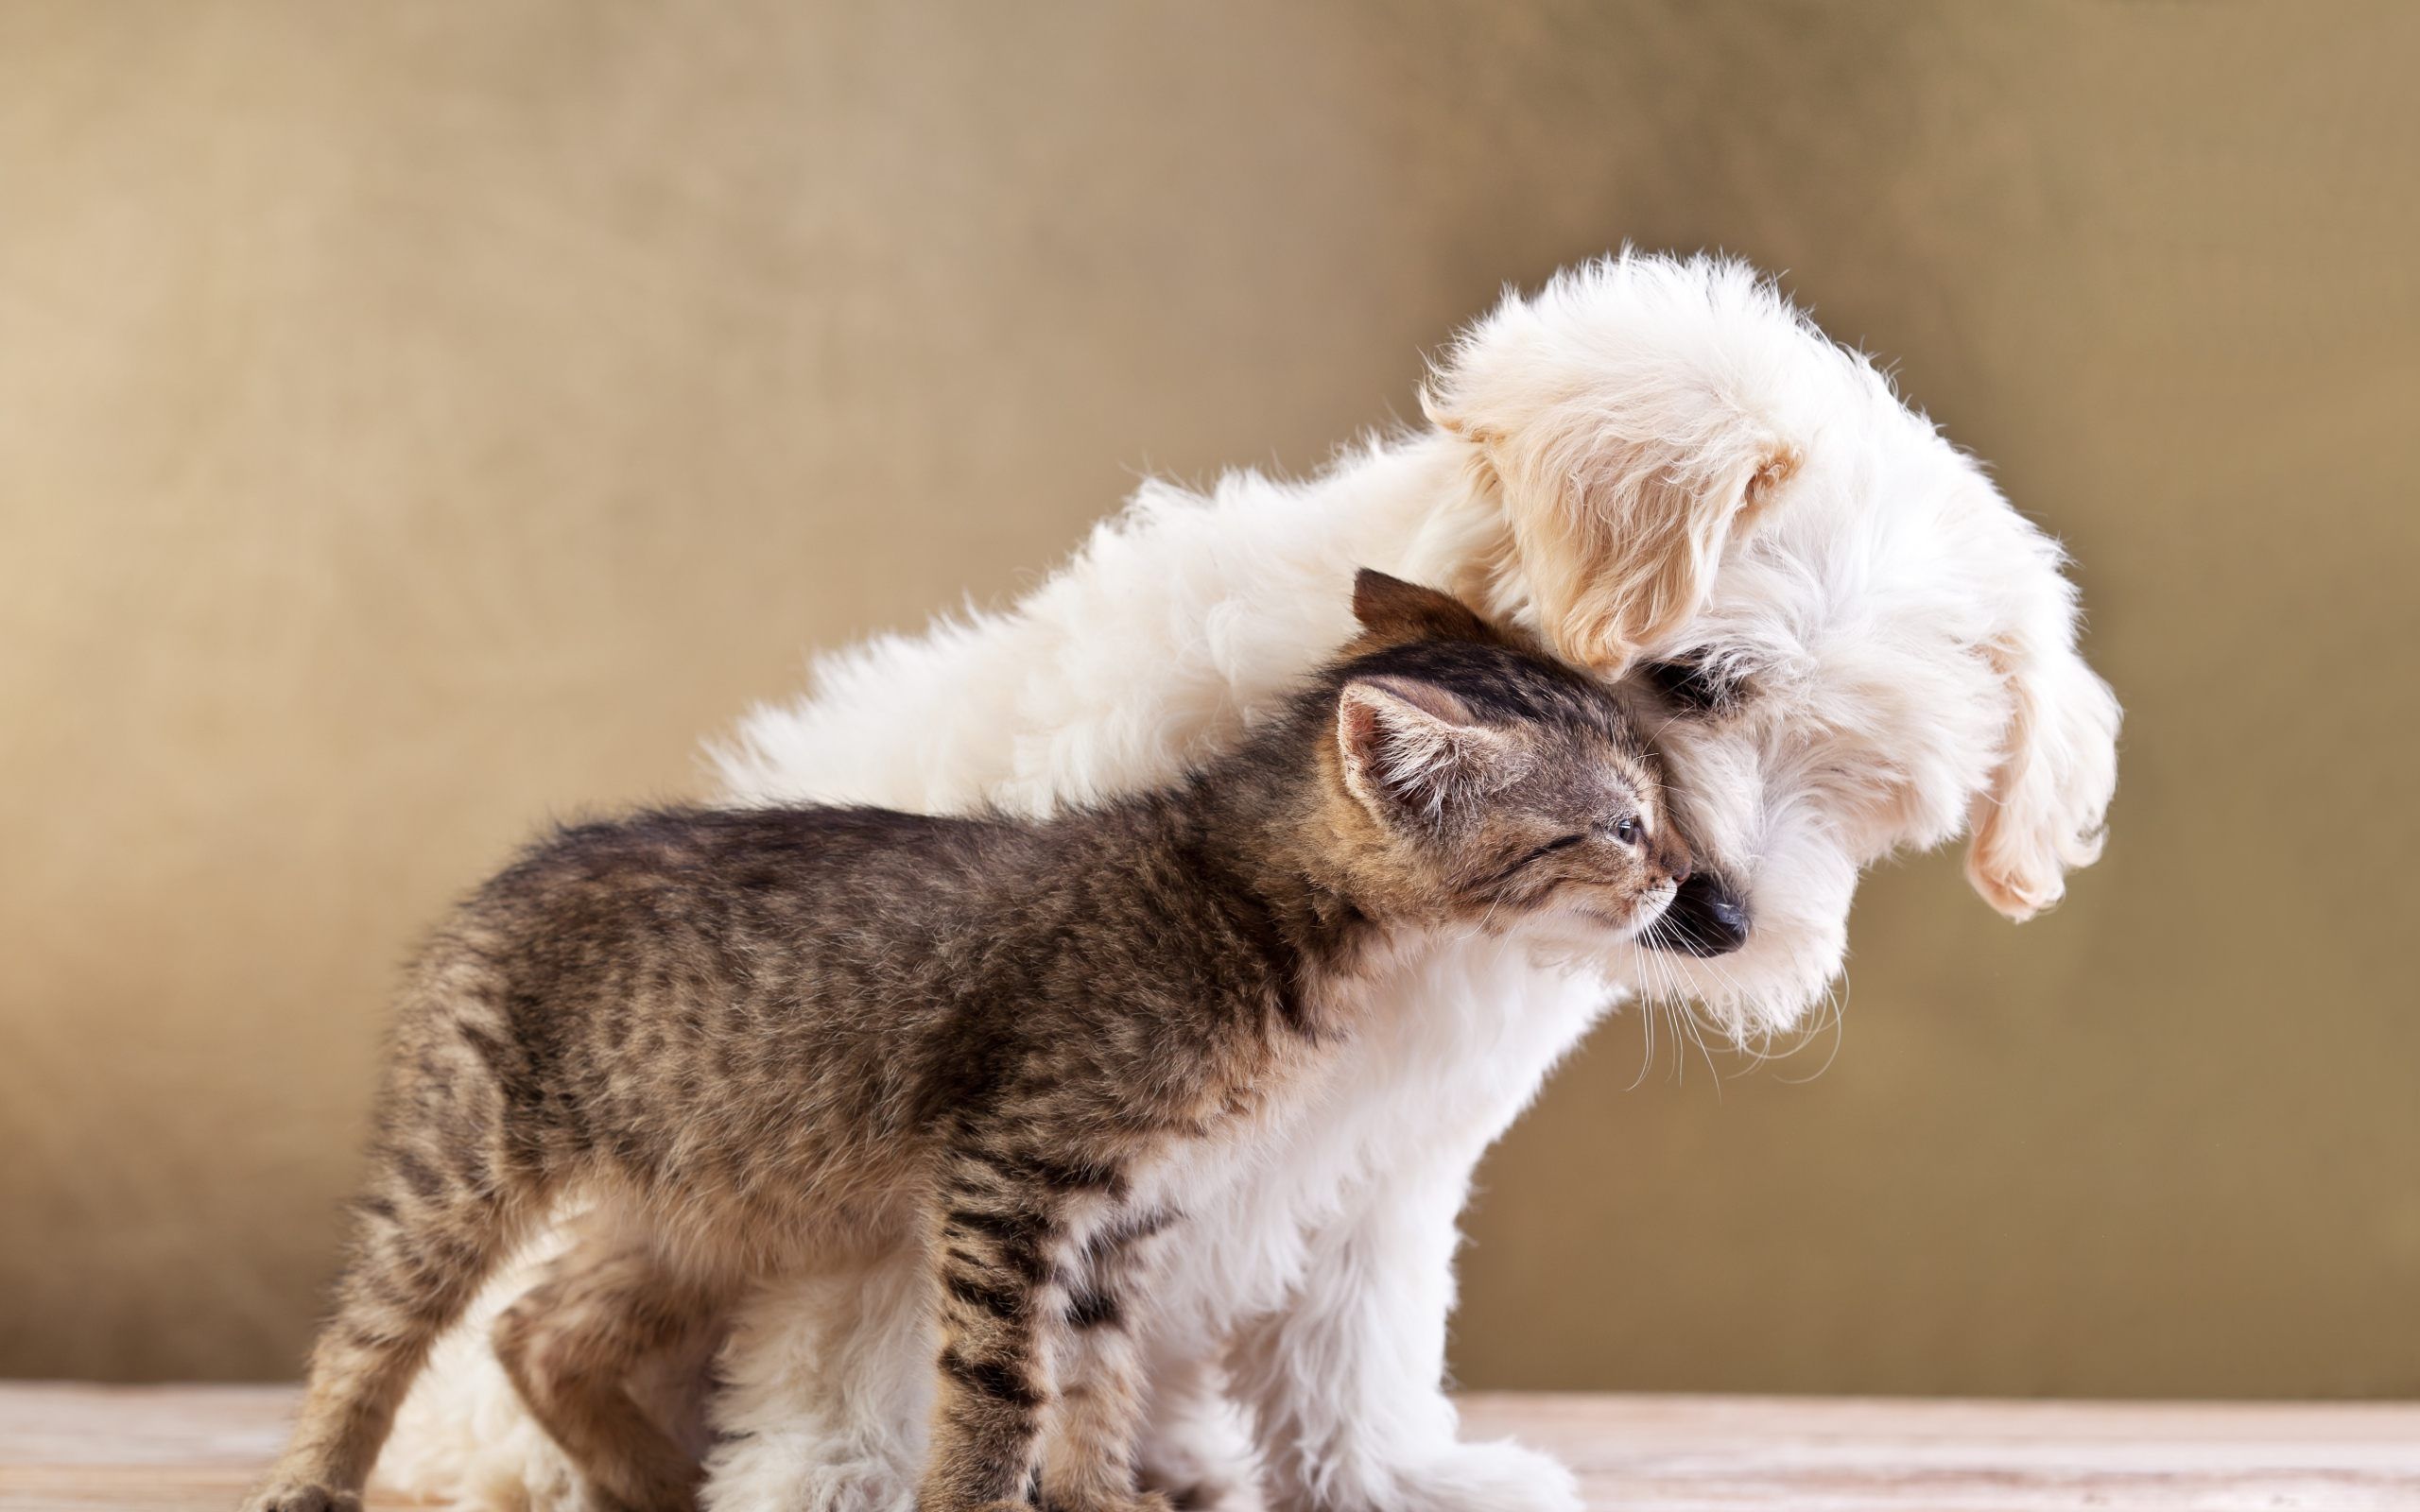 Puppy Cat Animals Love Wallpaper For Desktop & Mobile